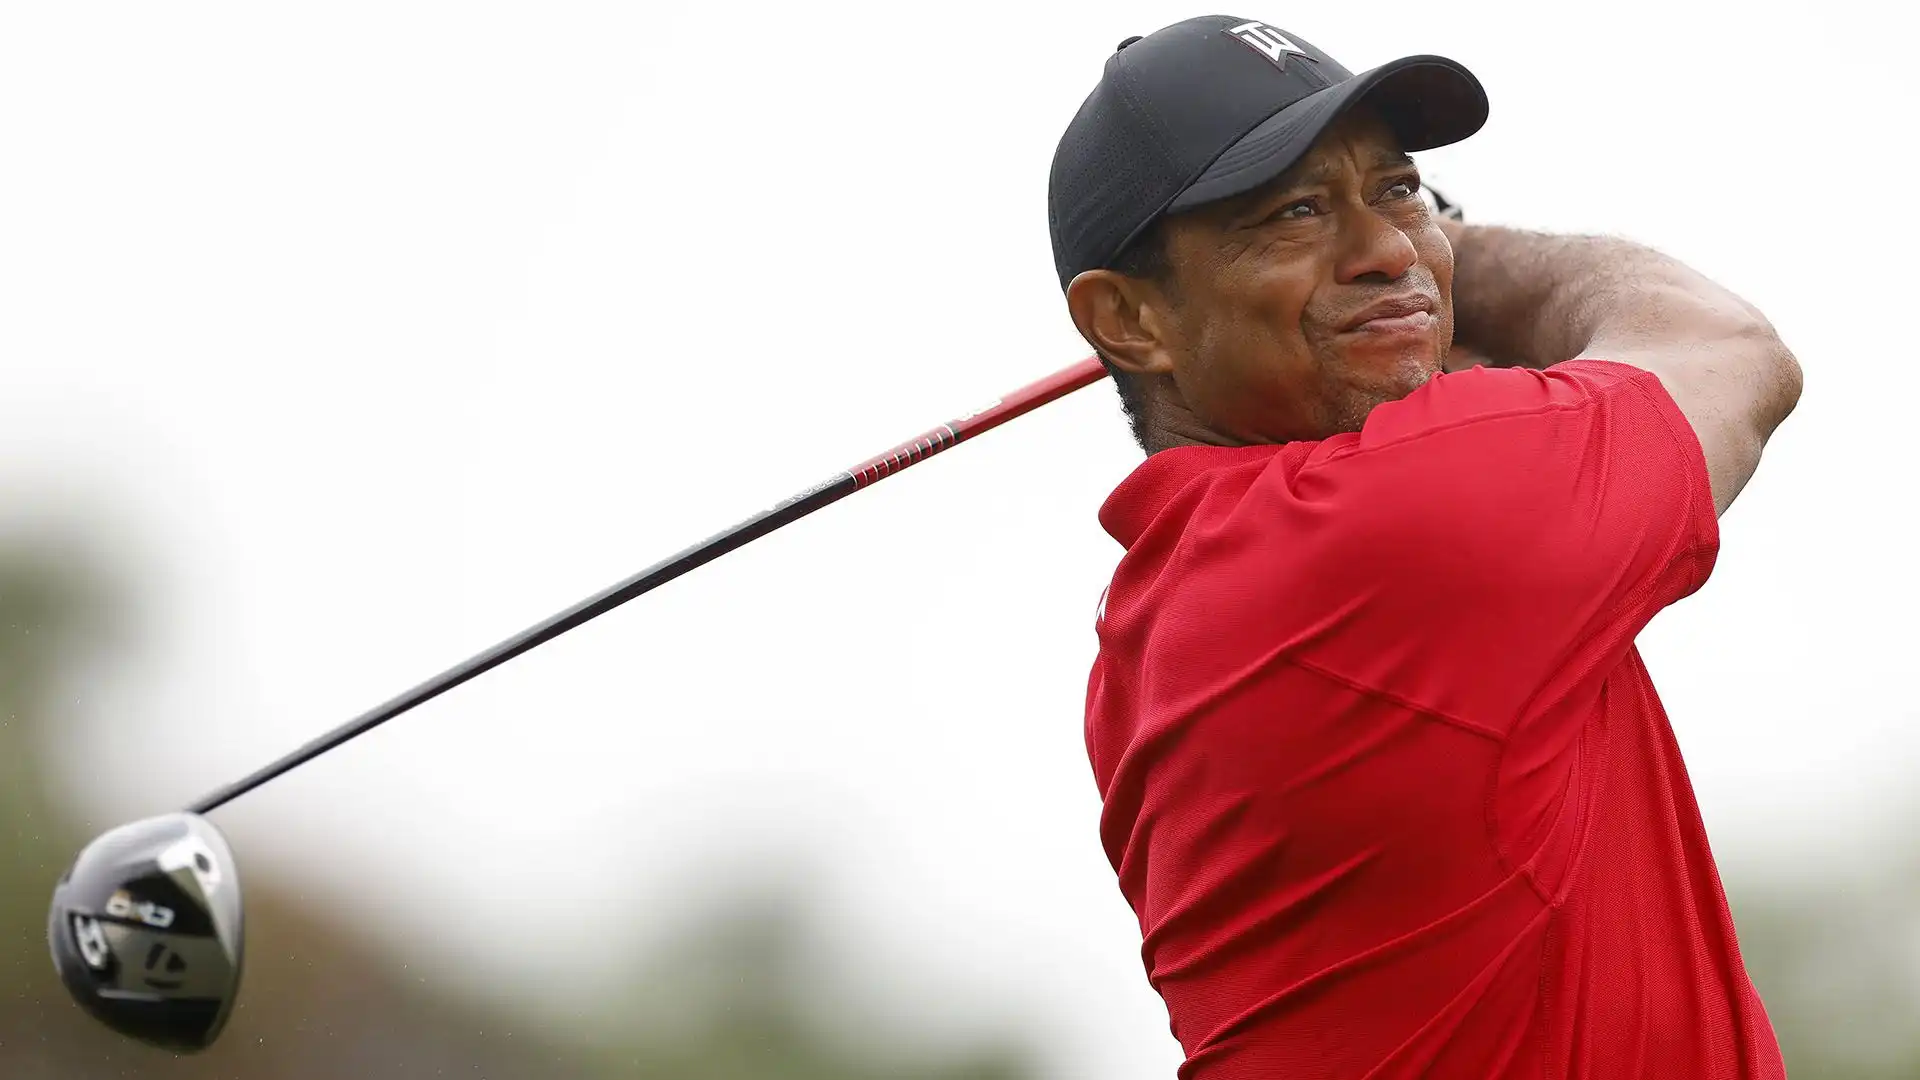 1) Tiger Woods (Stati Uniti): patrimonio stimato 1.1 miliardi di dollari